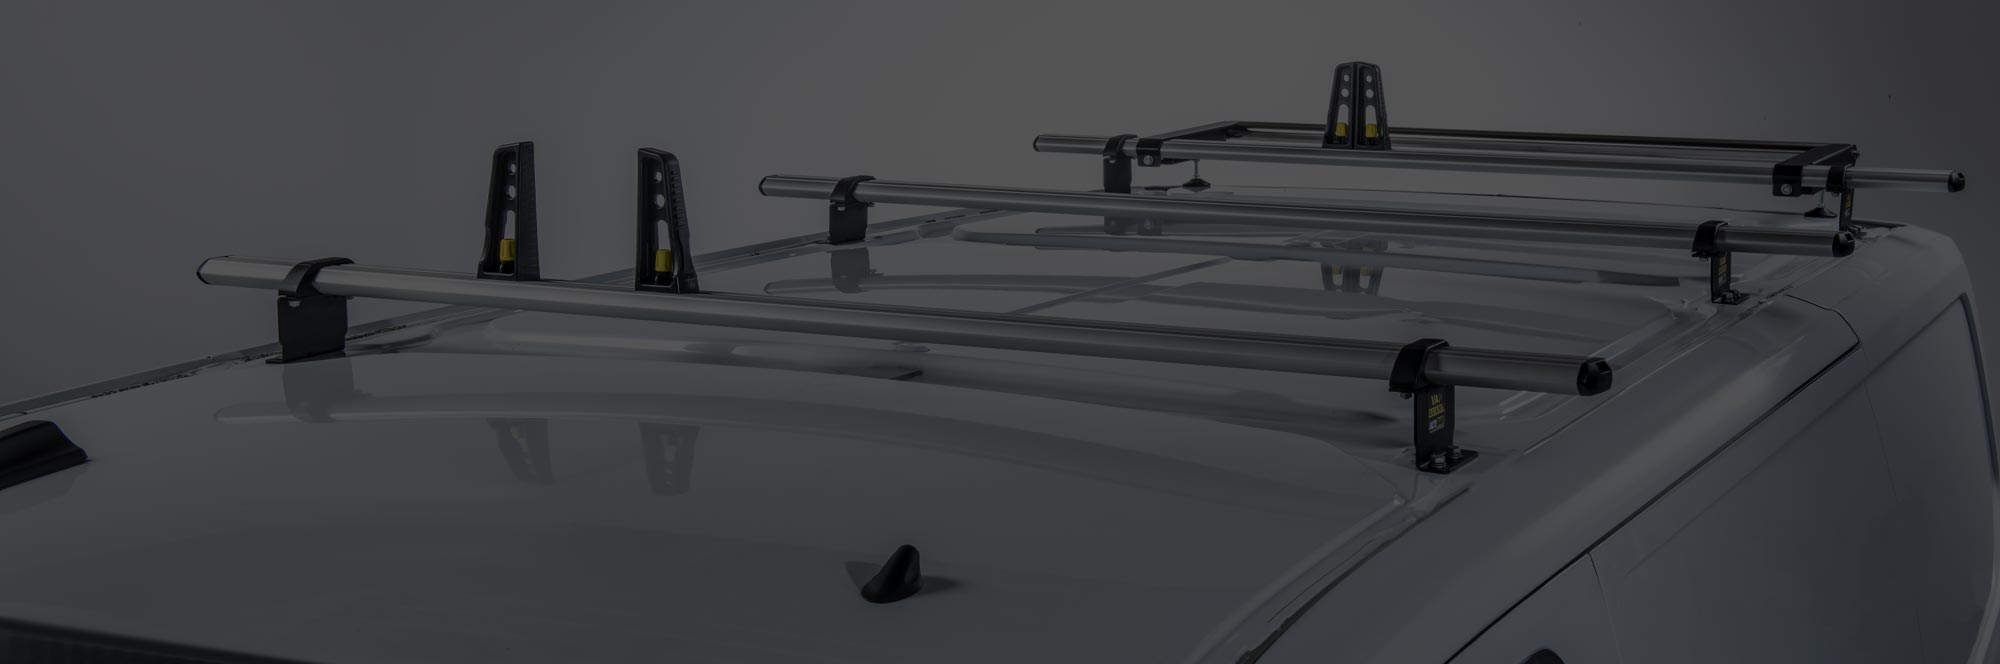 Van Guard Ulti Bar 3 Bar Roof Rack and Rear Ladder Roller Kit for Mercedes Vito 2014 on